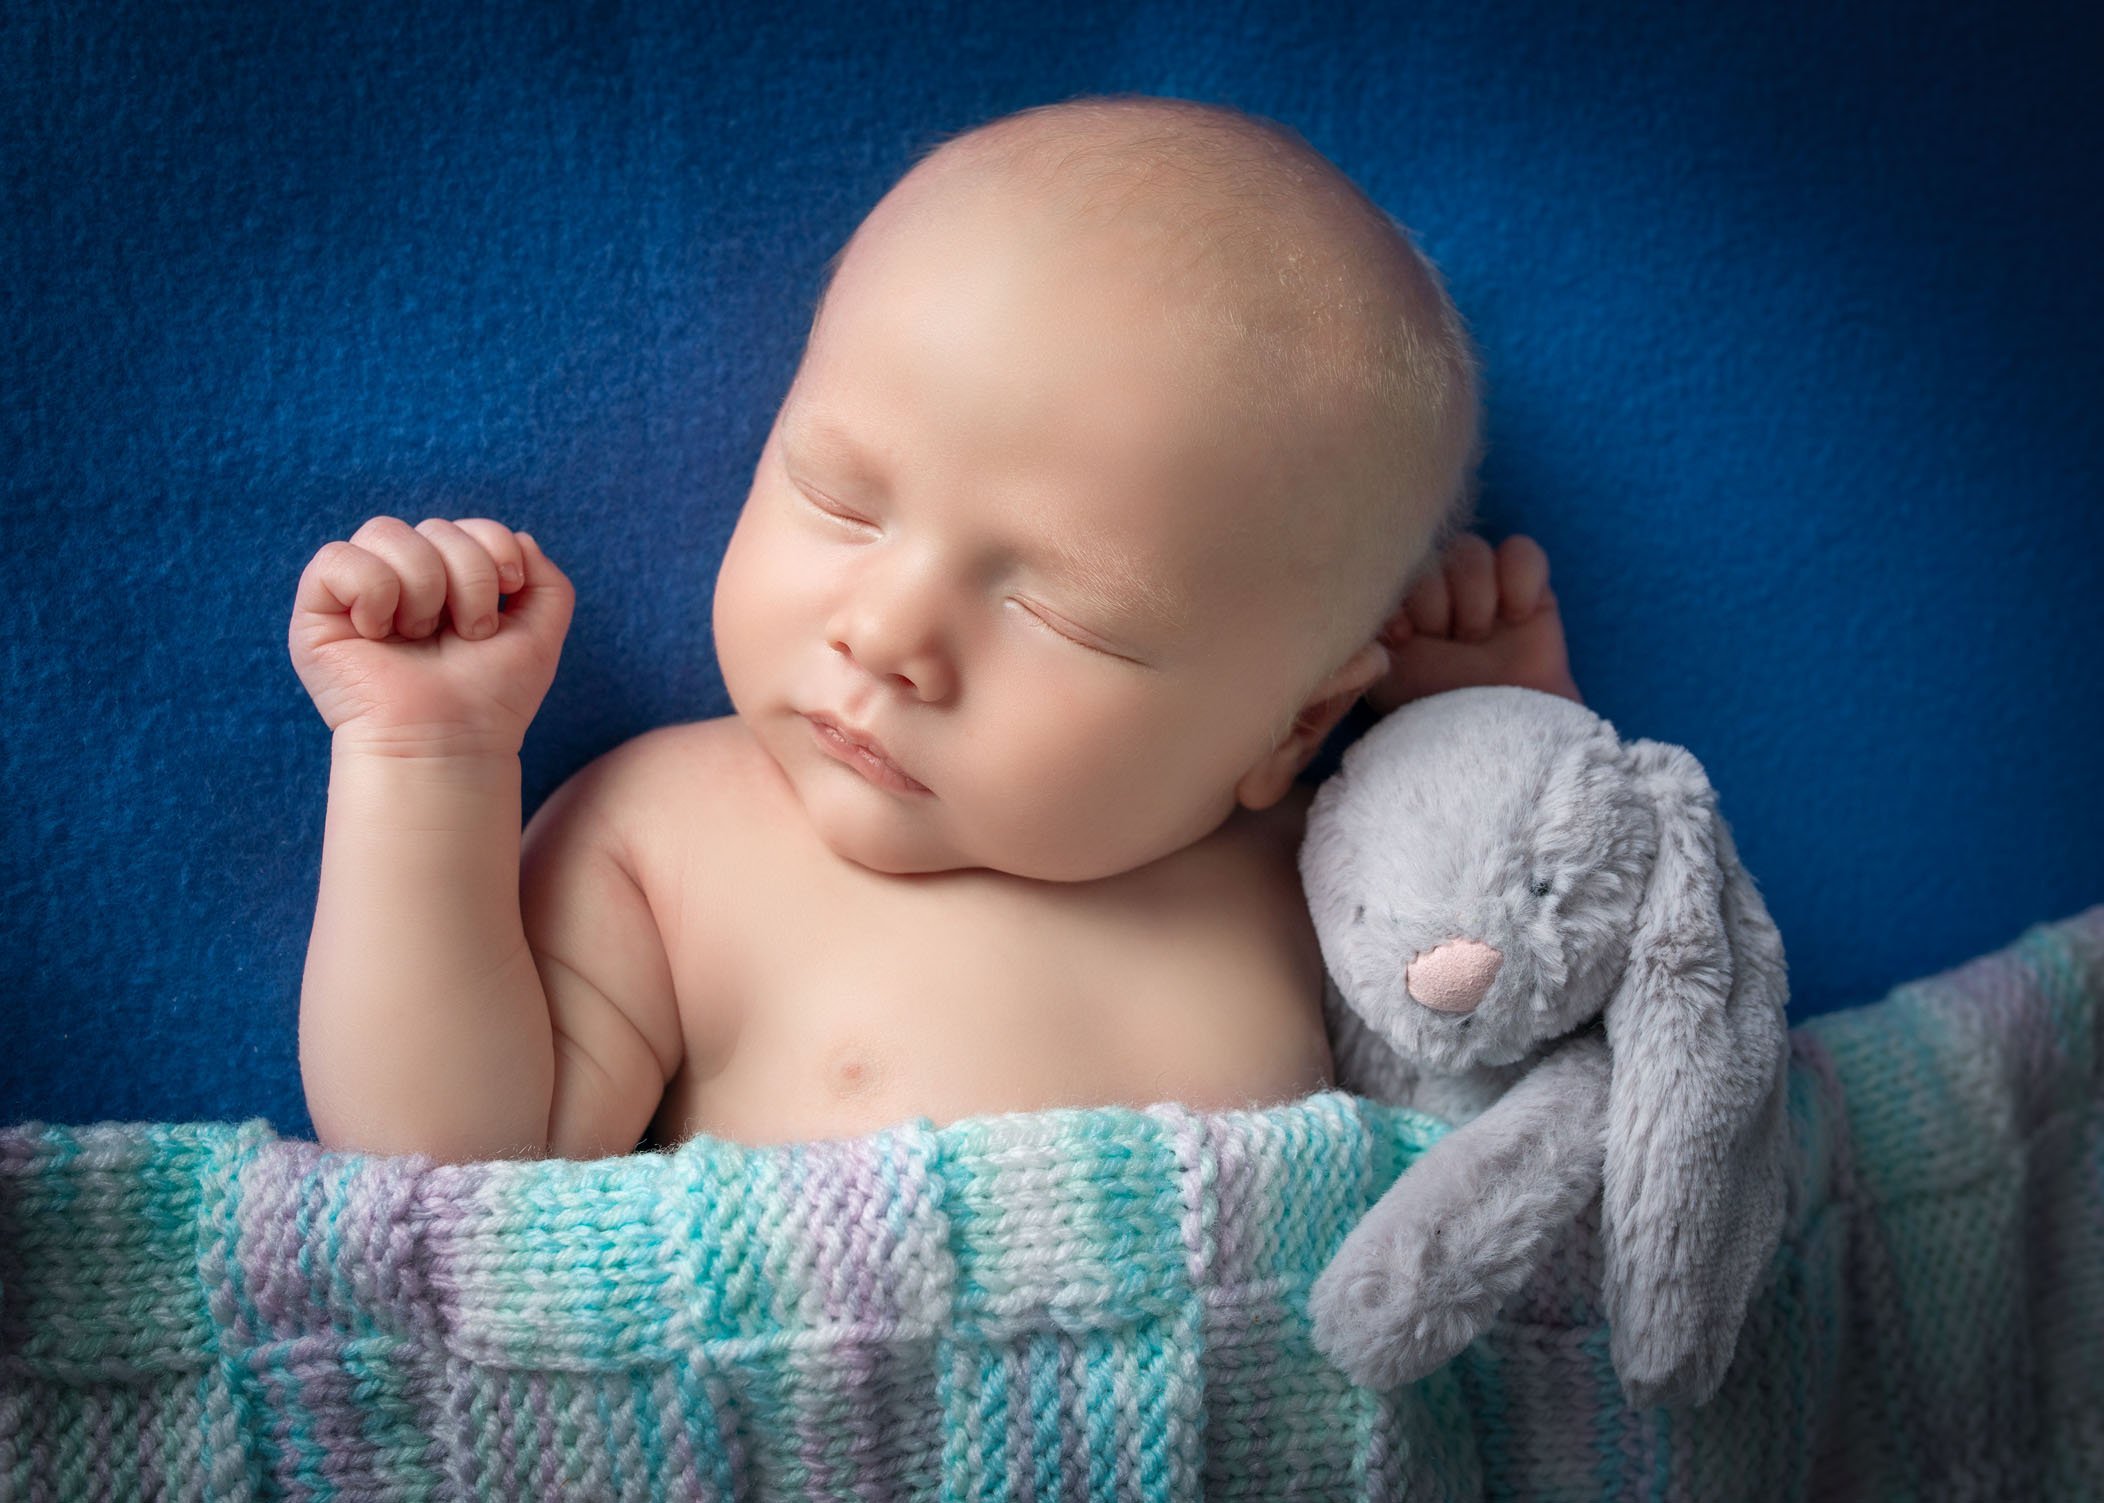 newborn baby boy sleeping under knitted blanket with stuffed rabbit